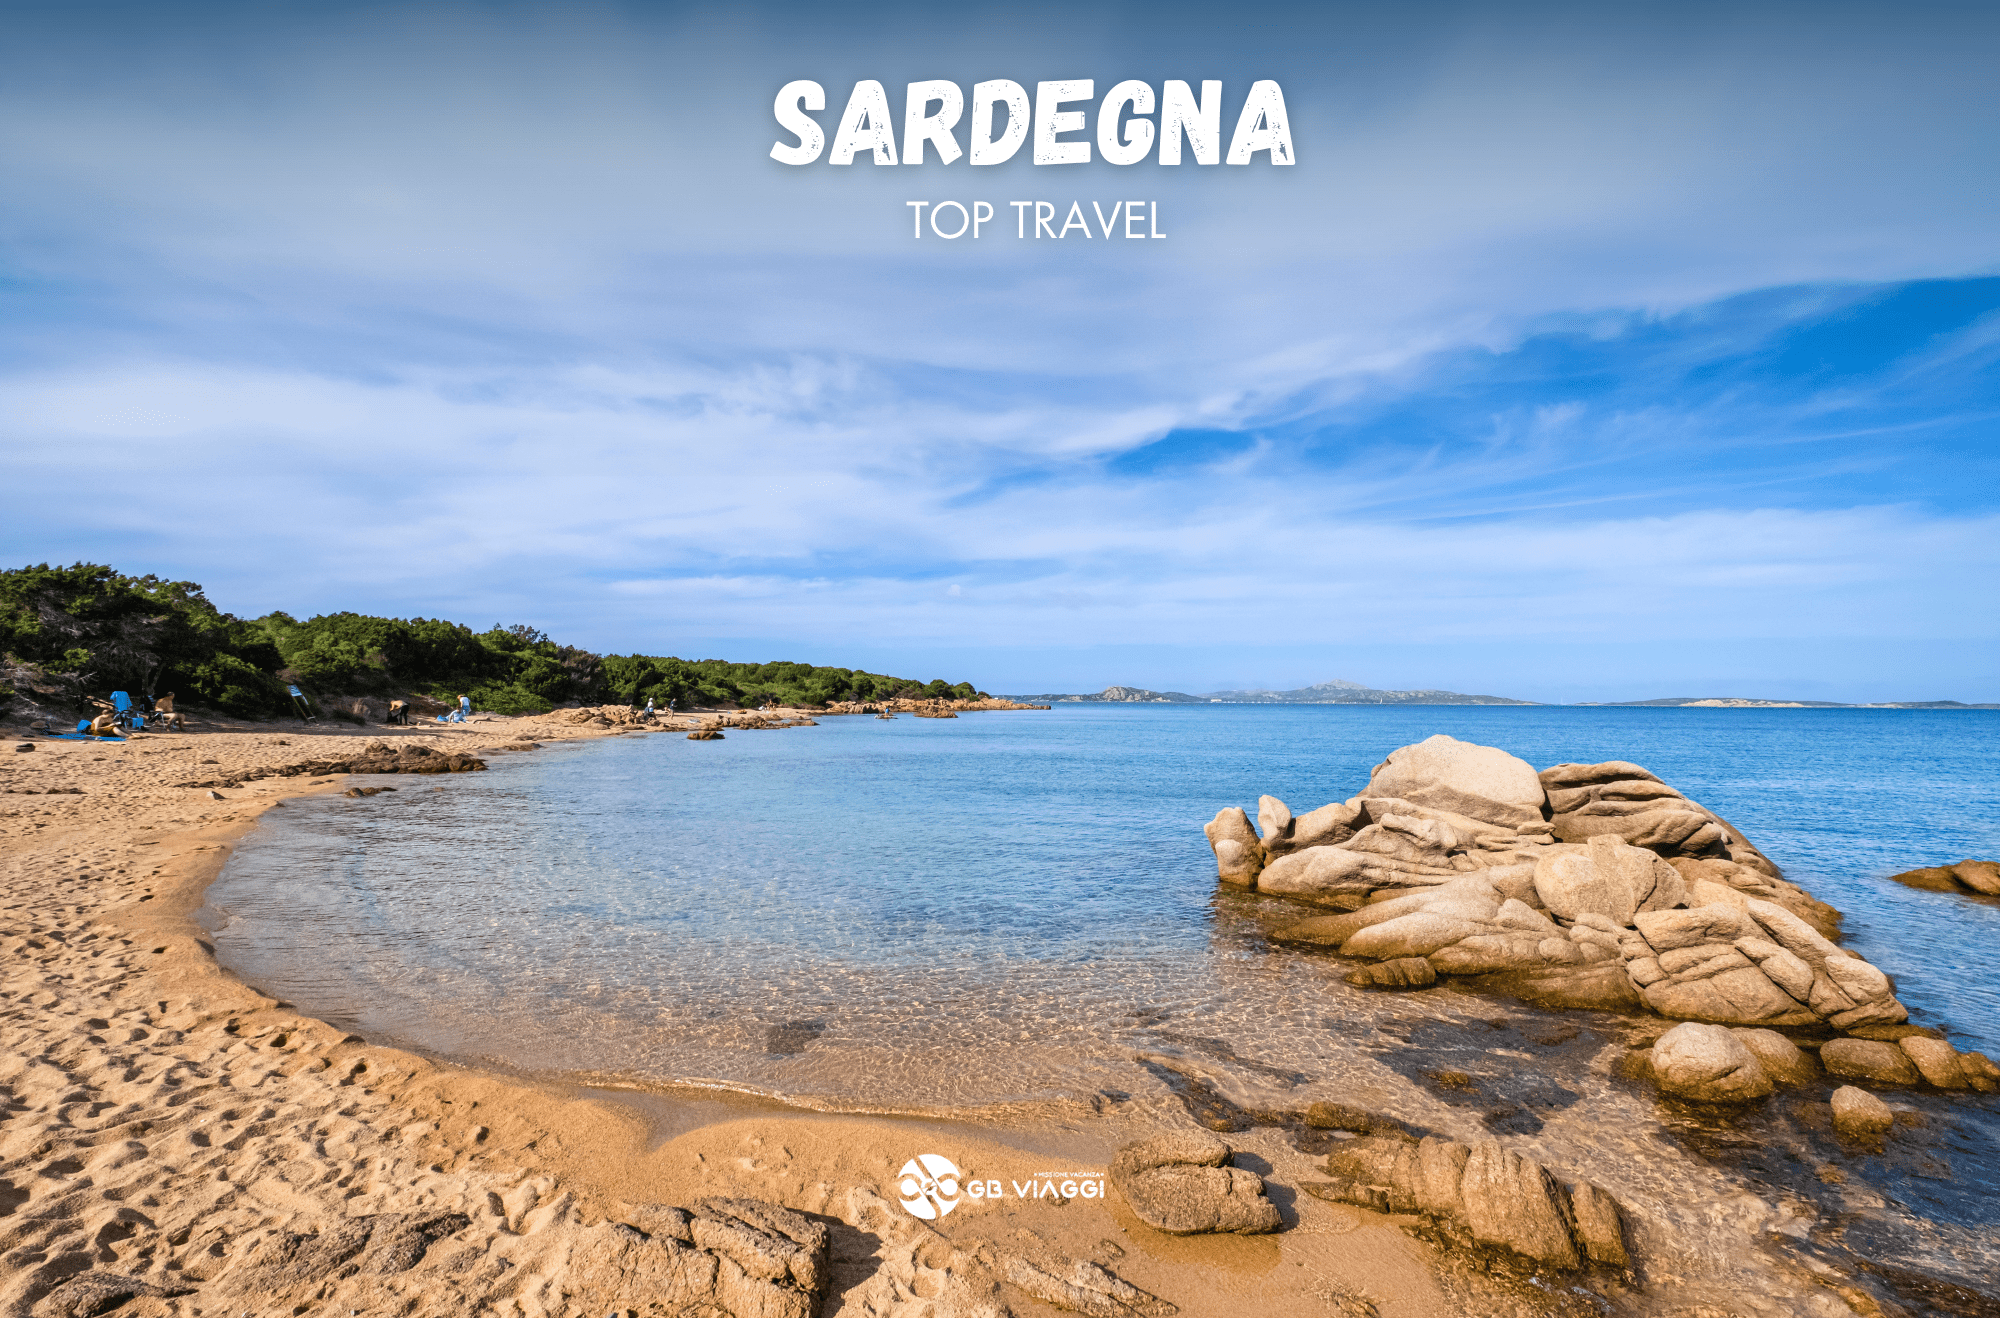 Top Travel Sardegna